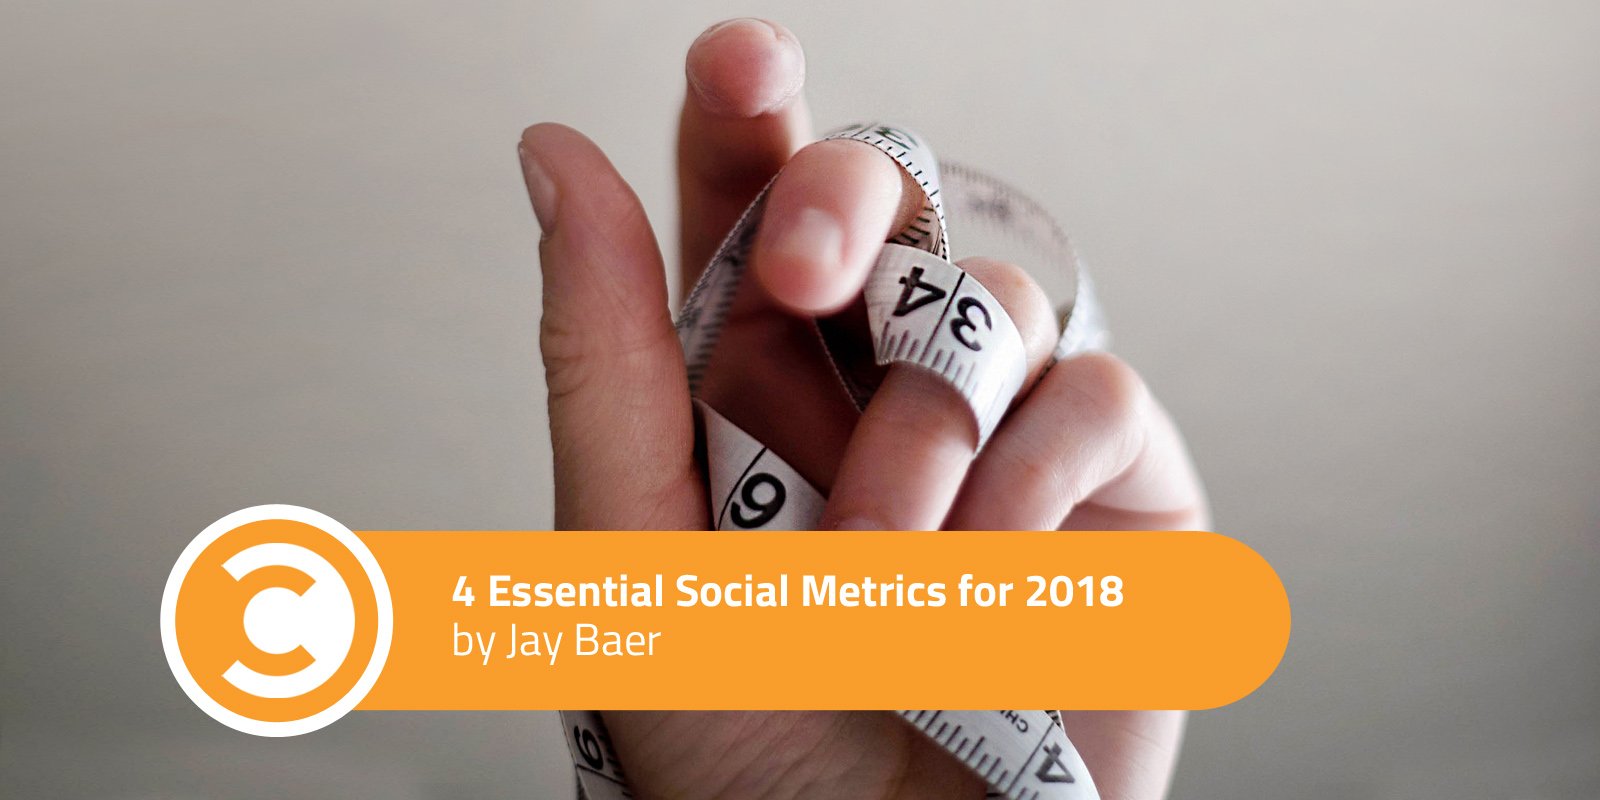 4 Essential Social Metrics for 2018